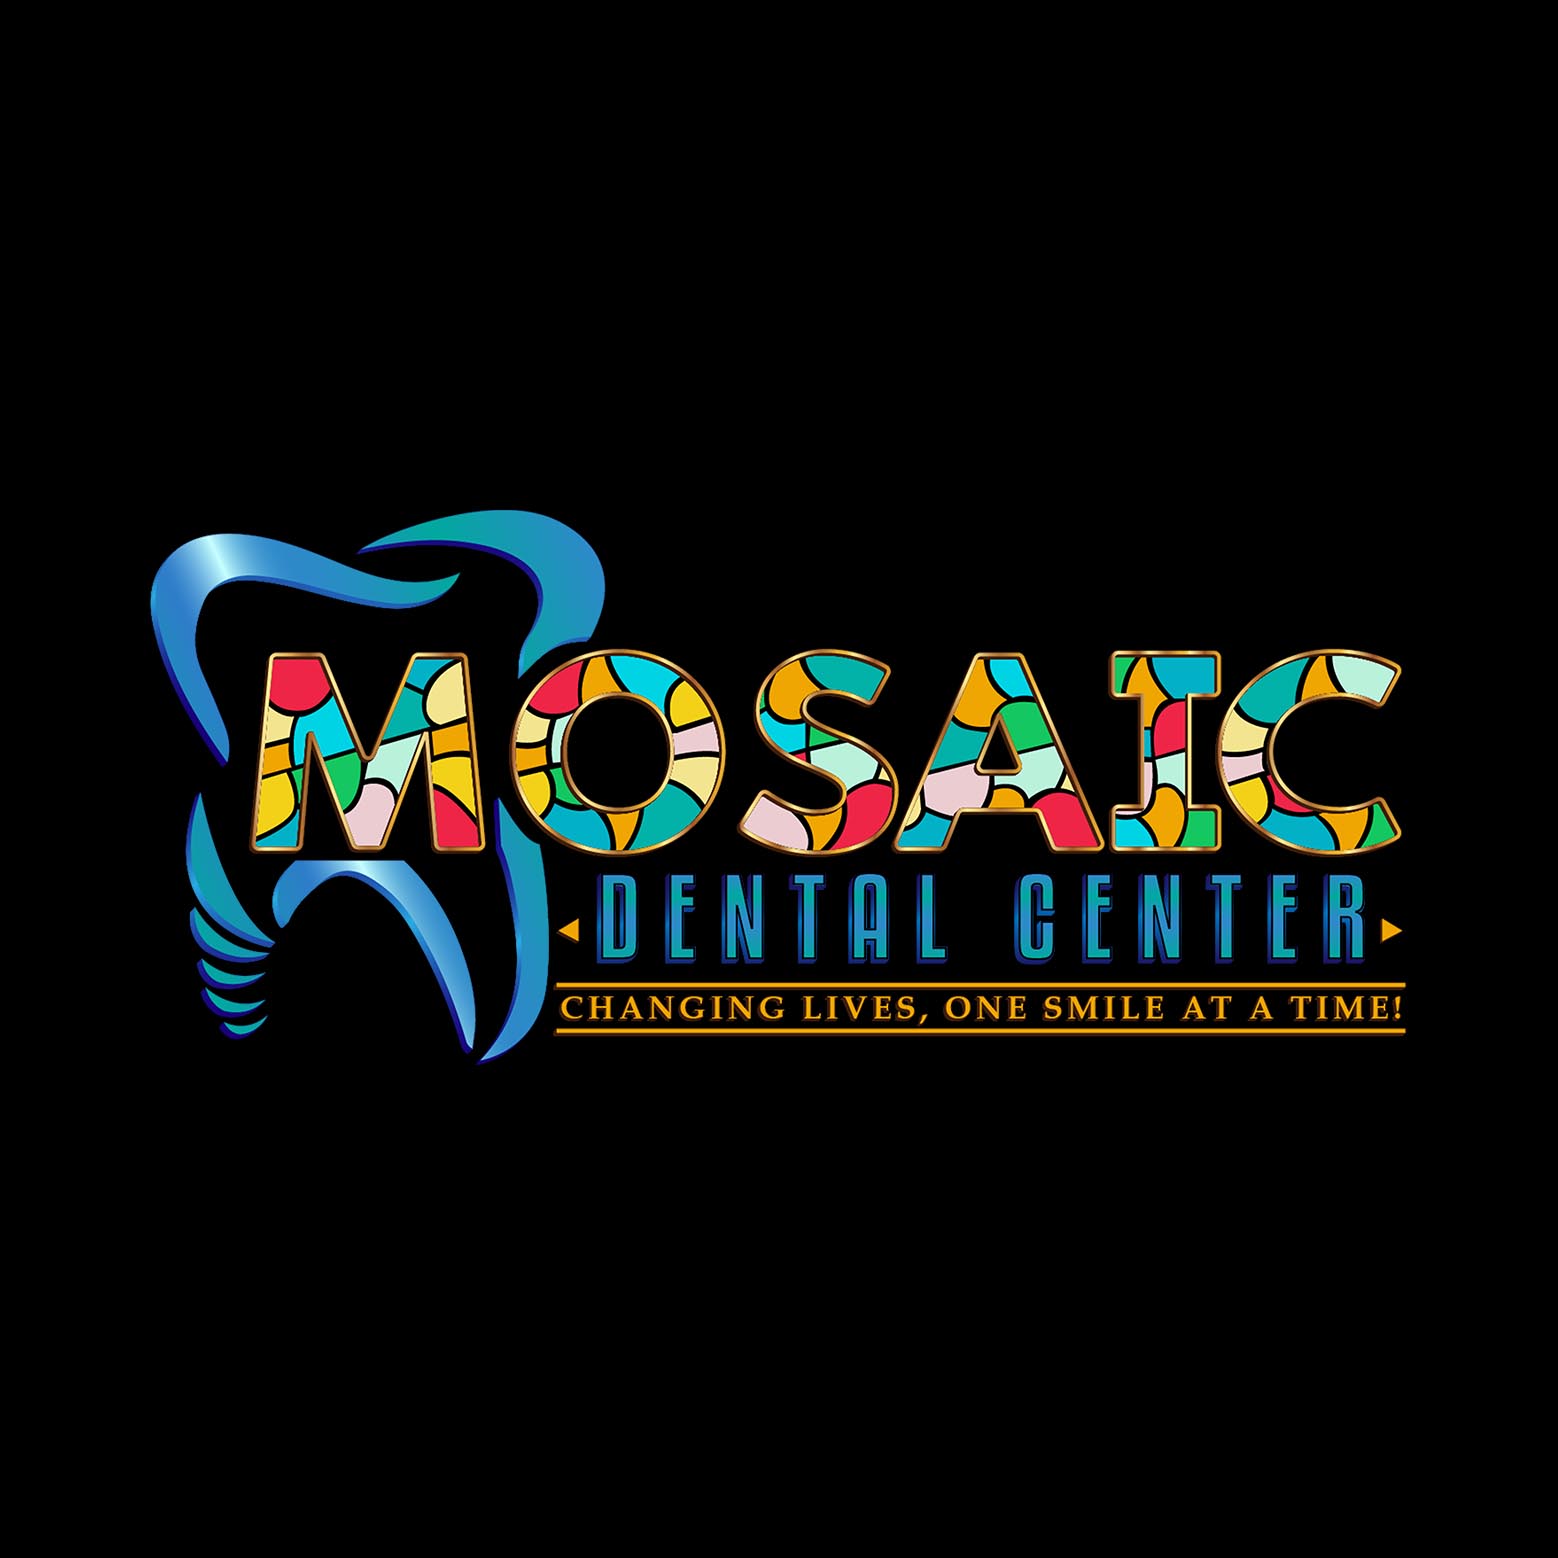 Mosaic Dental Center Named Best Dentist in Orlando, FL by USA News